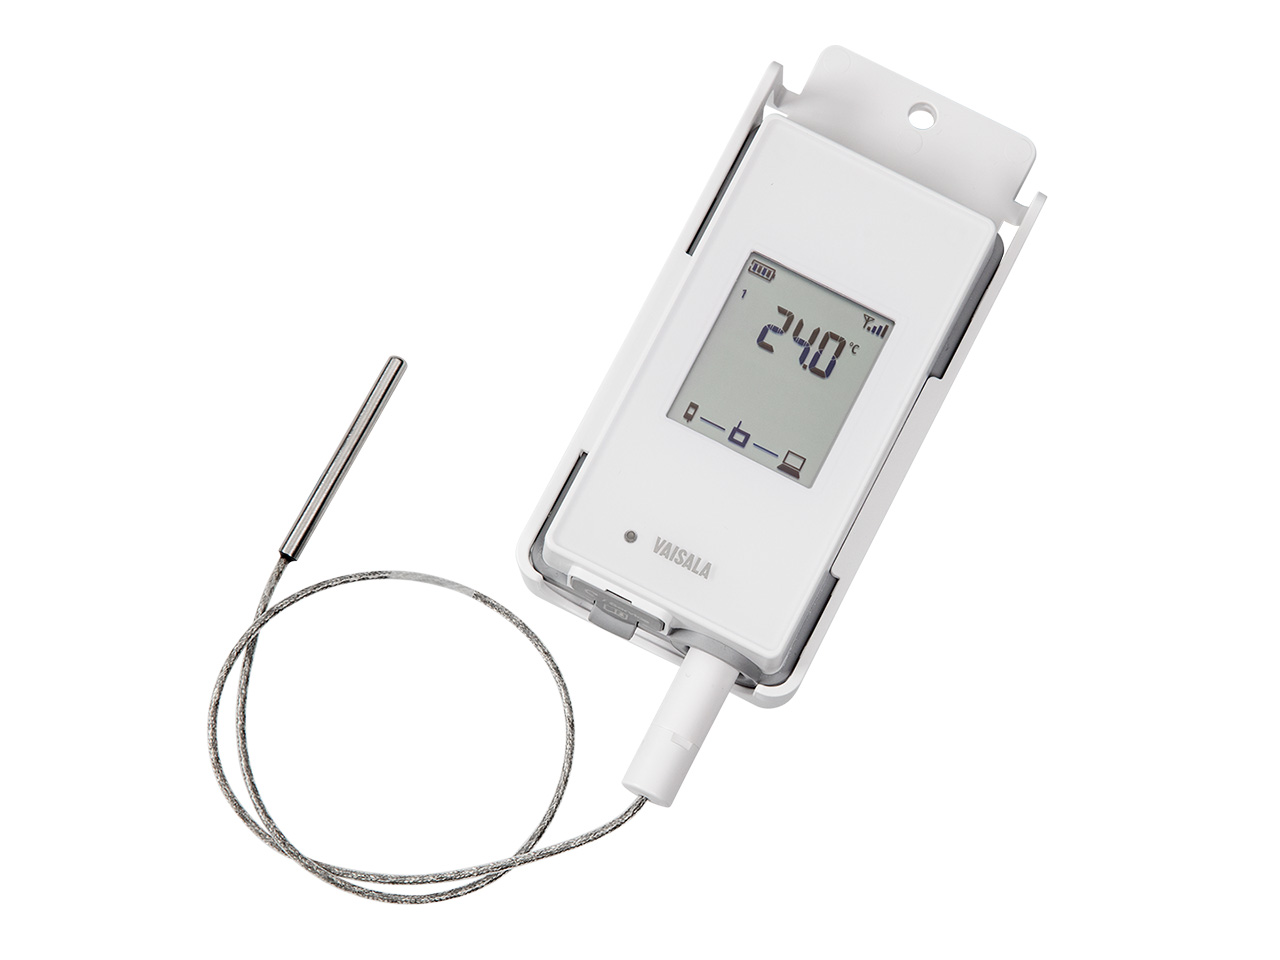 For Fridge and freezer monitoring wireless temperature sensor